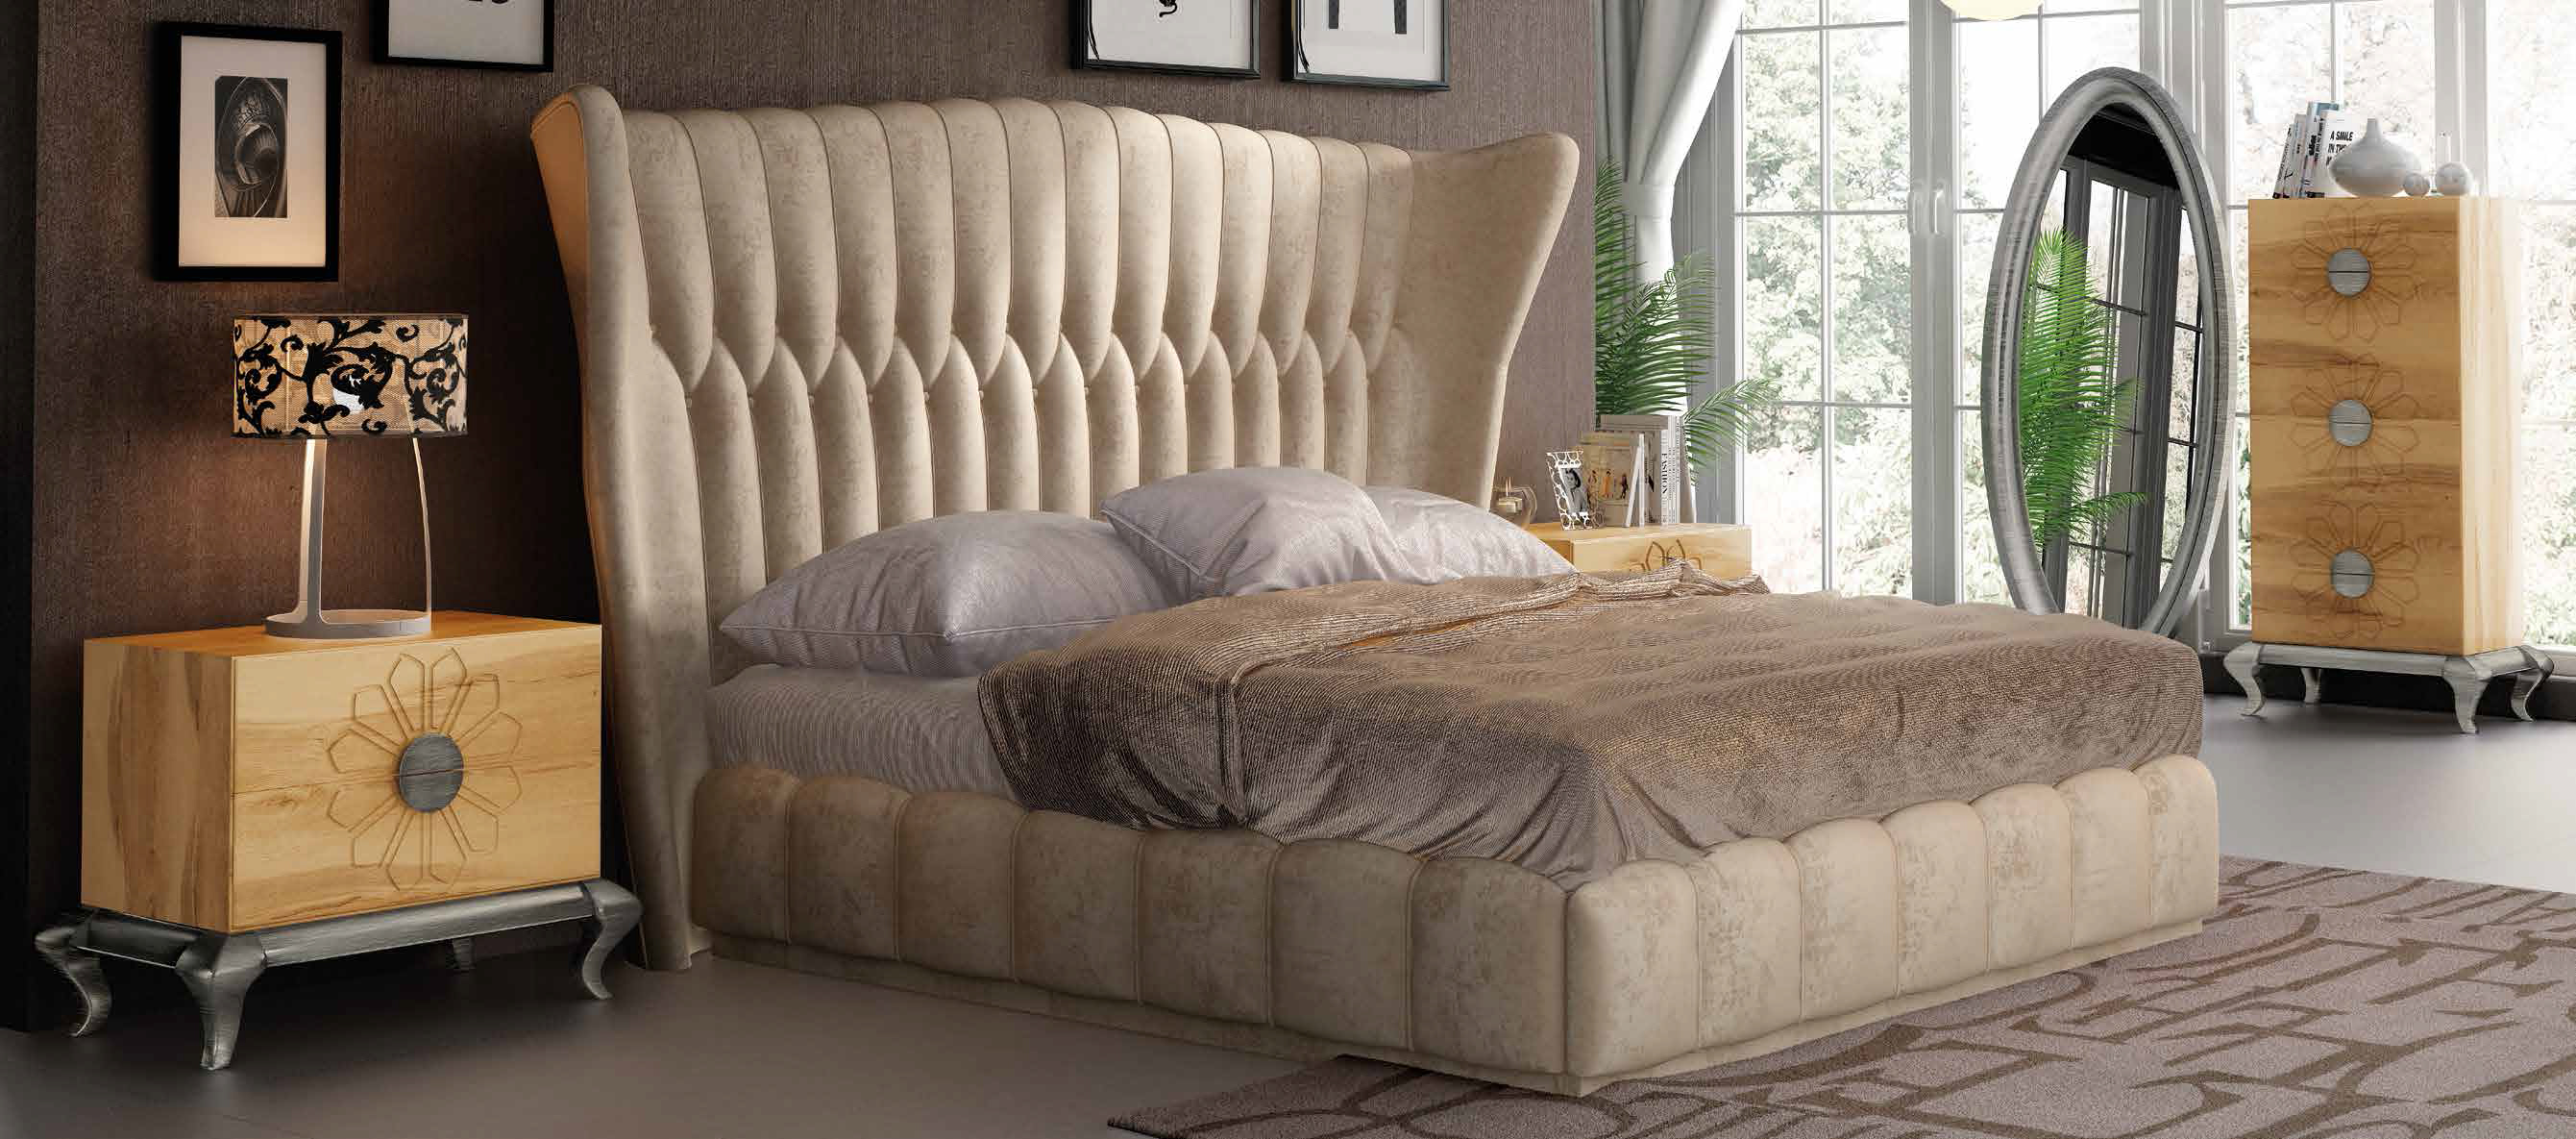 Brands Franco Furniture Bedrooms vol3, Spain DOR 61